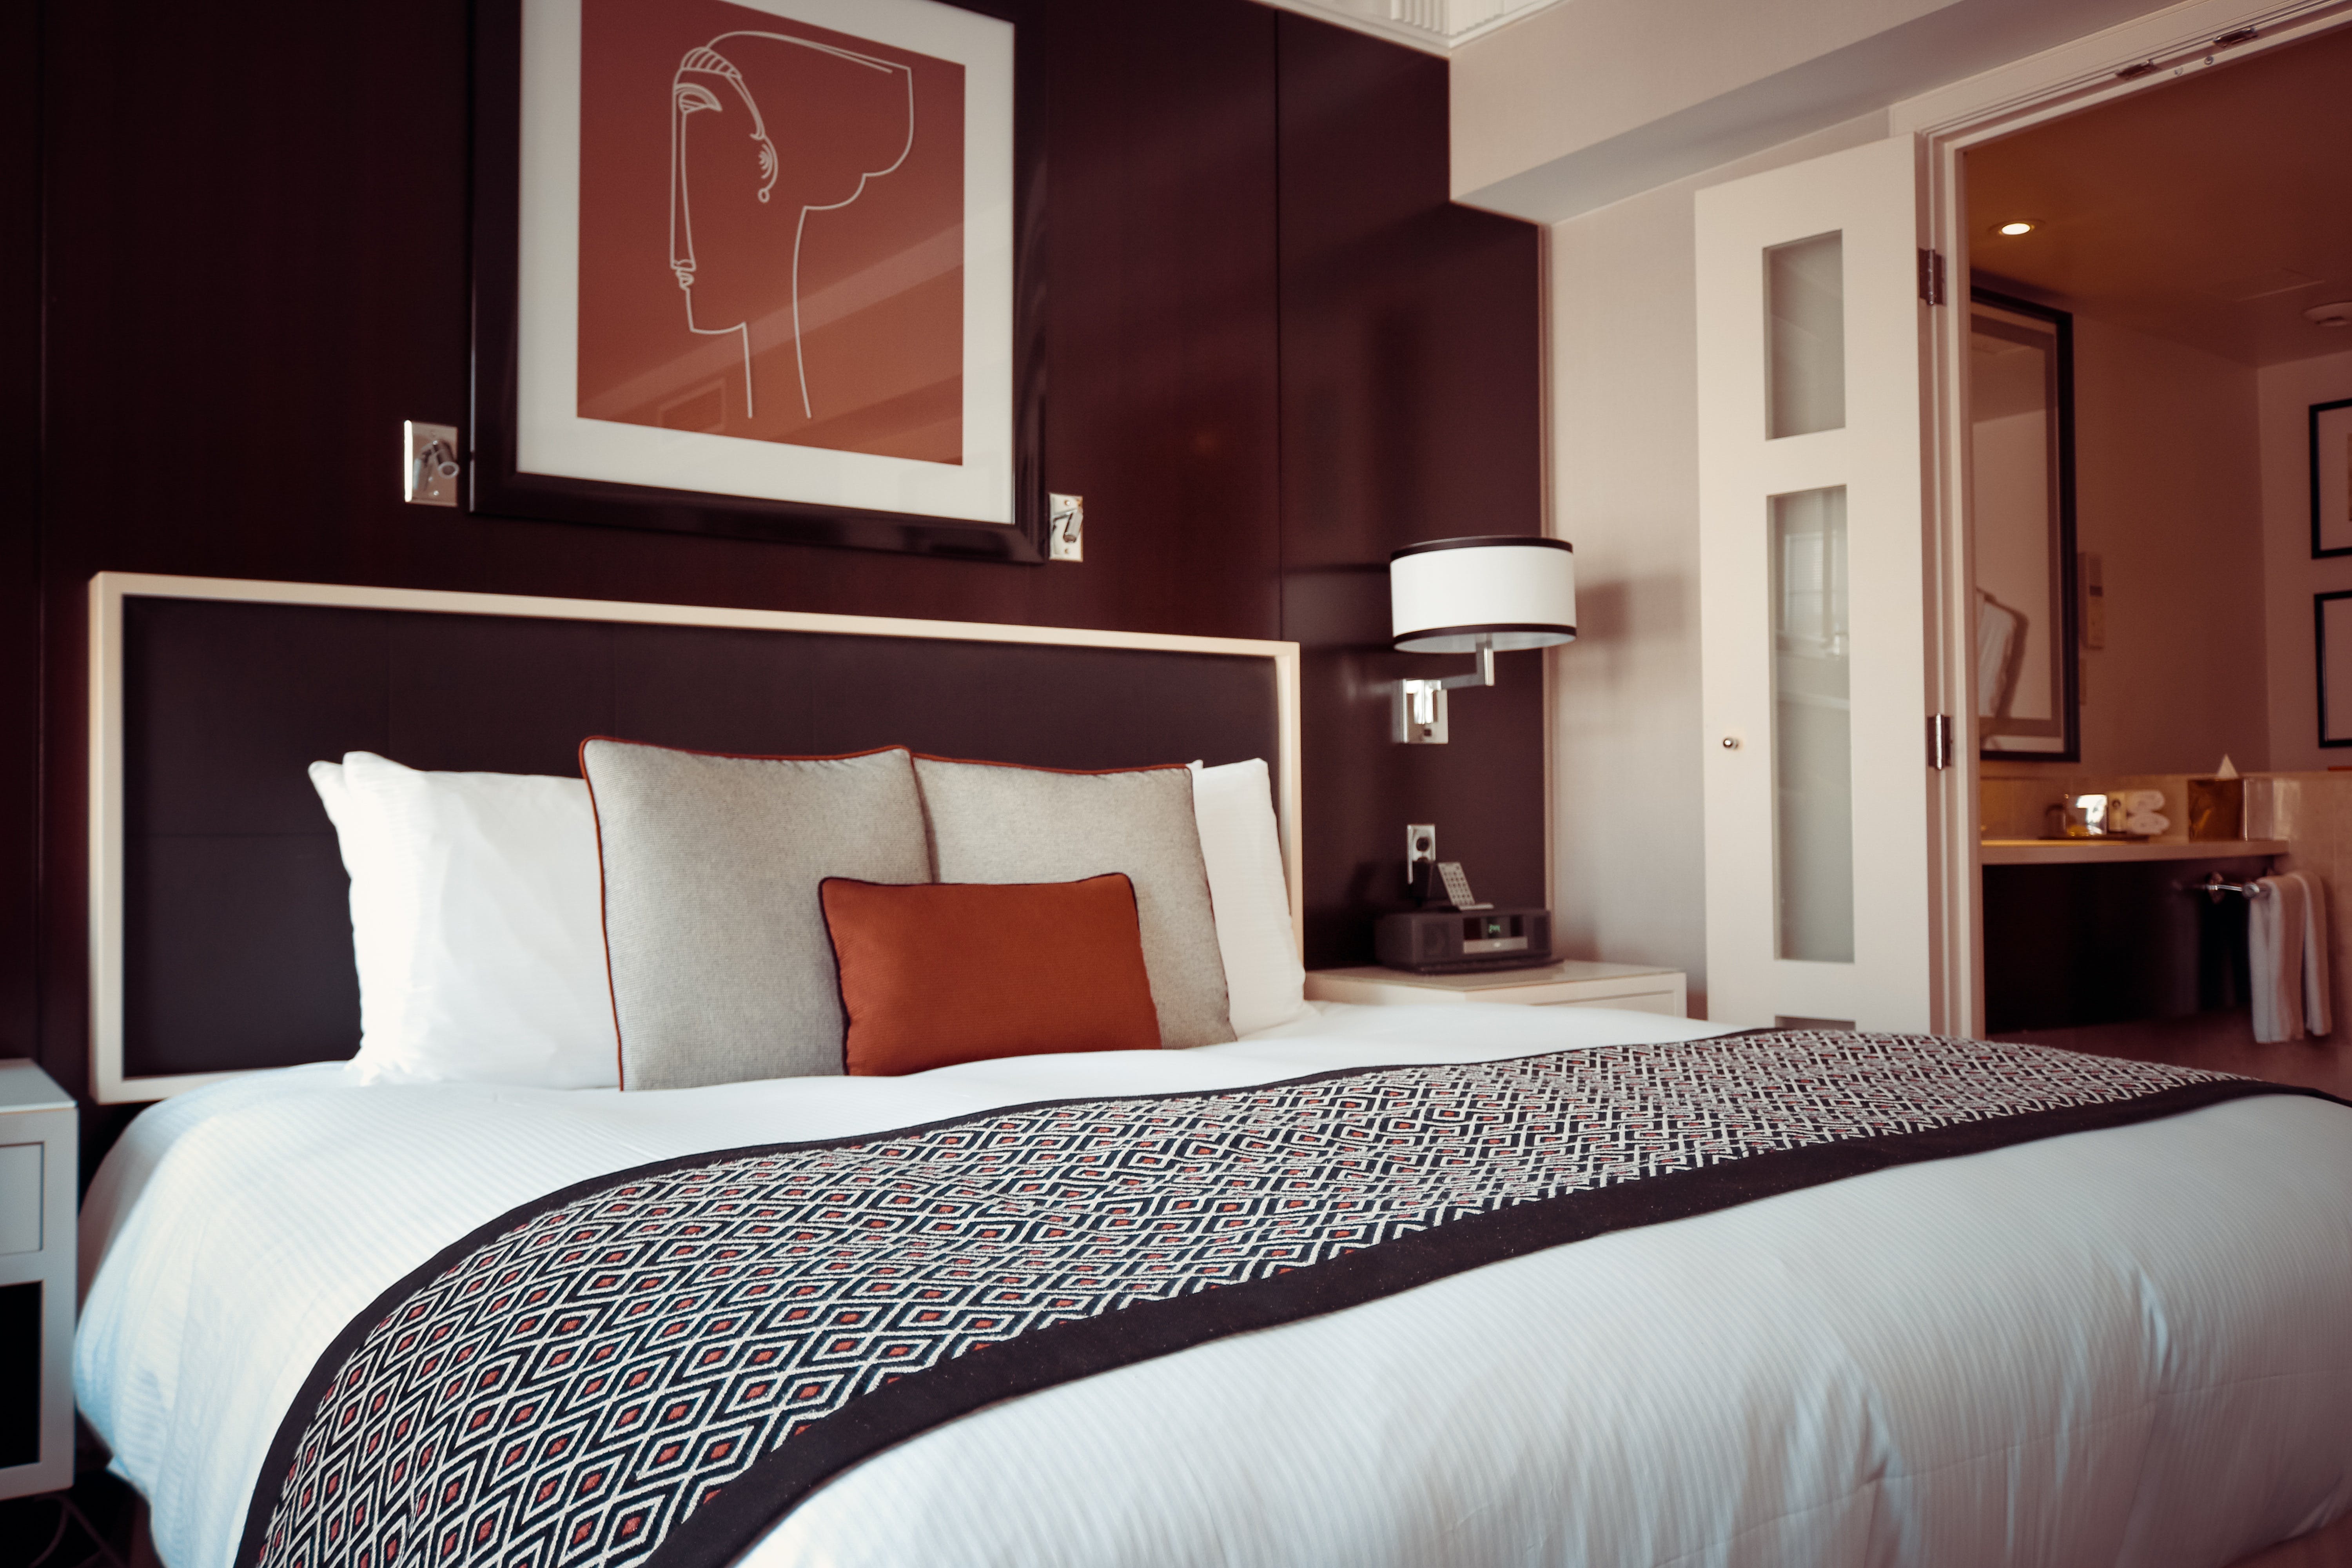 Łóżko hotelowe a jakość snu